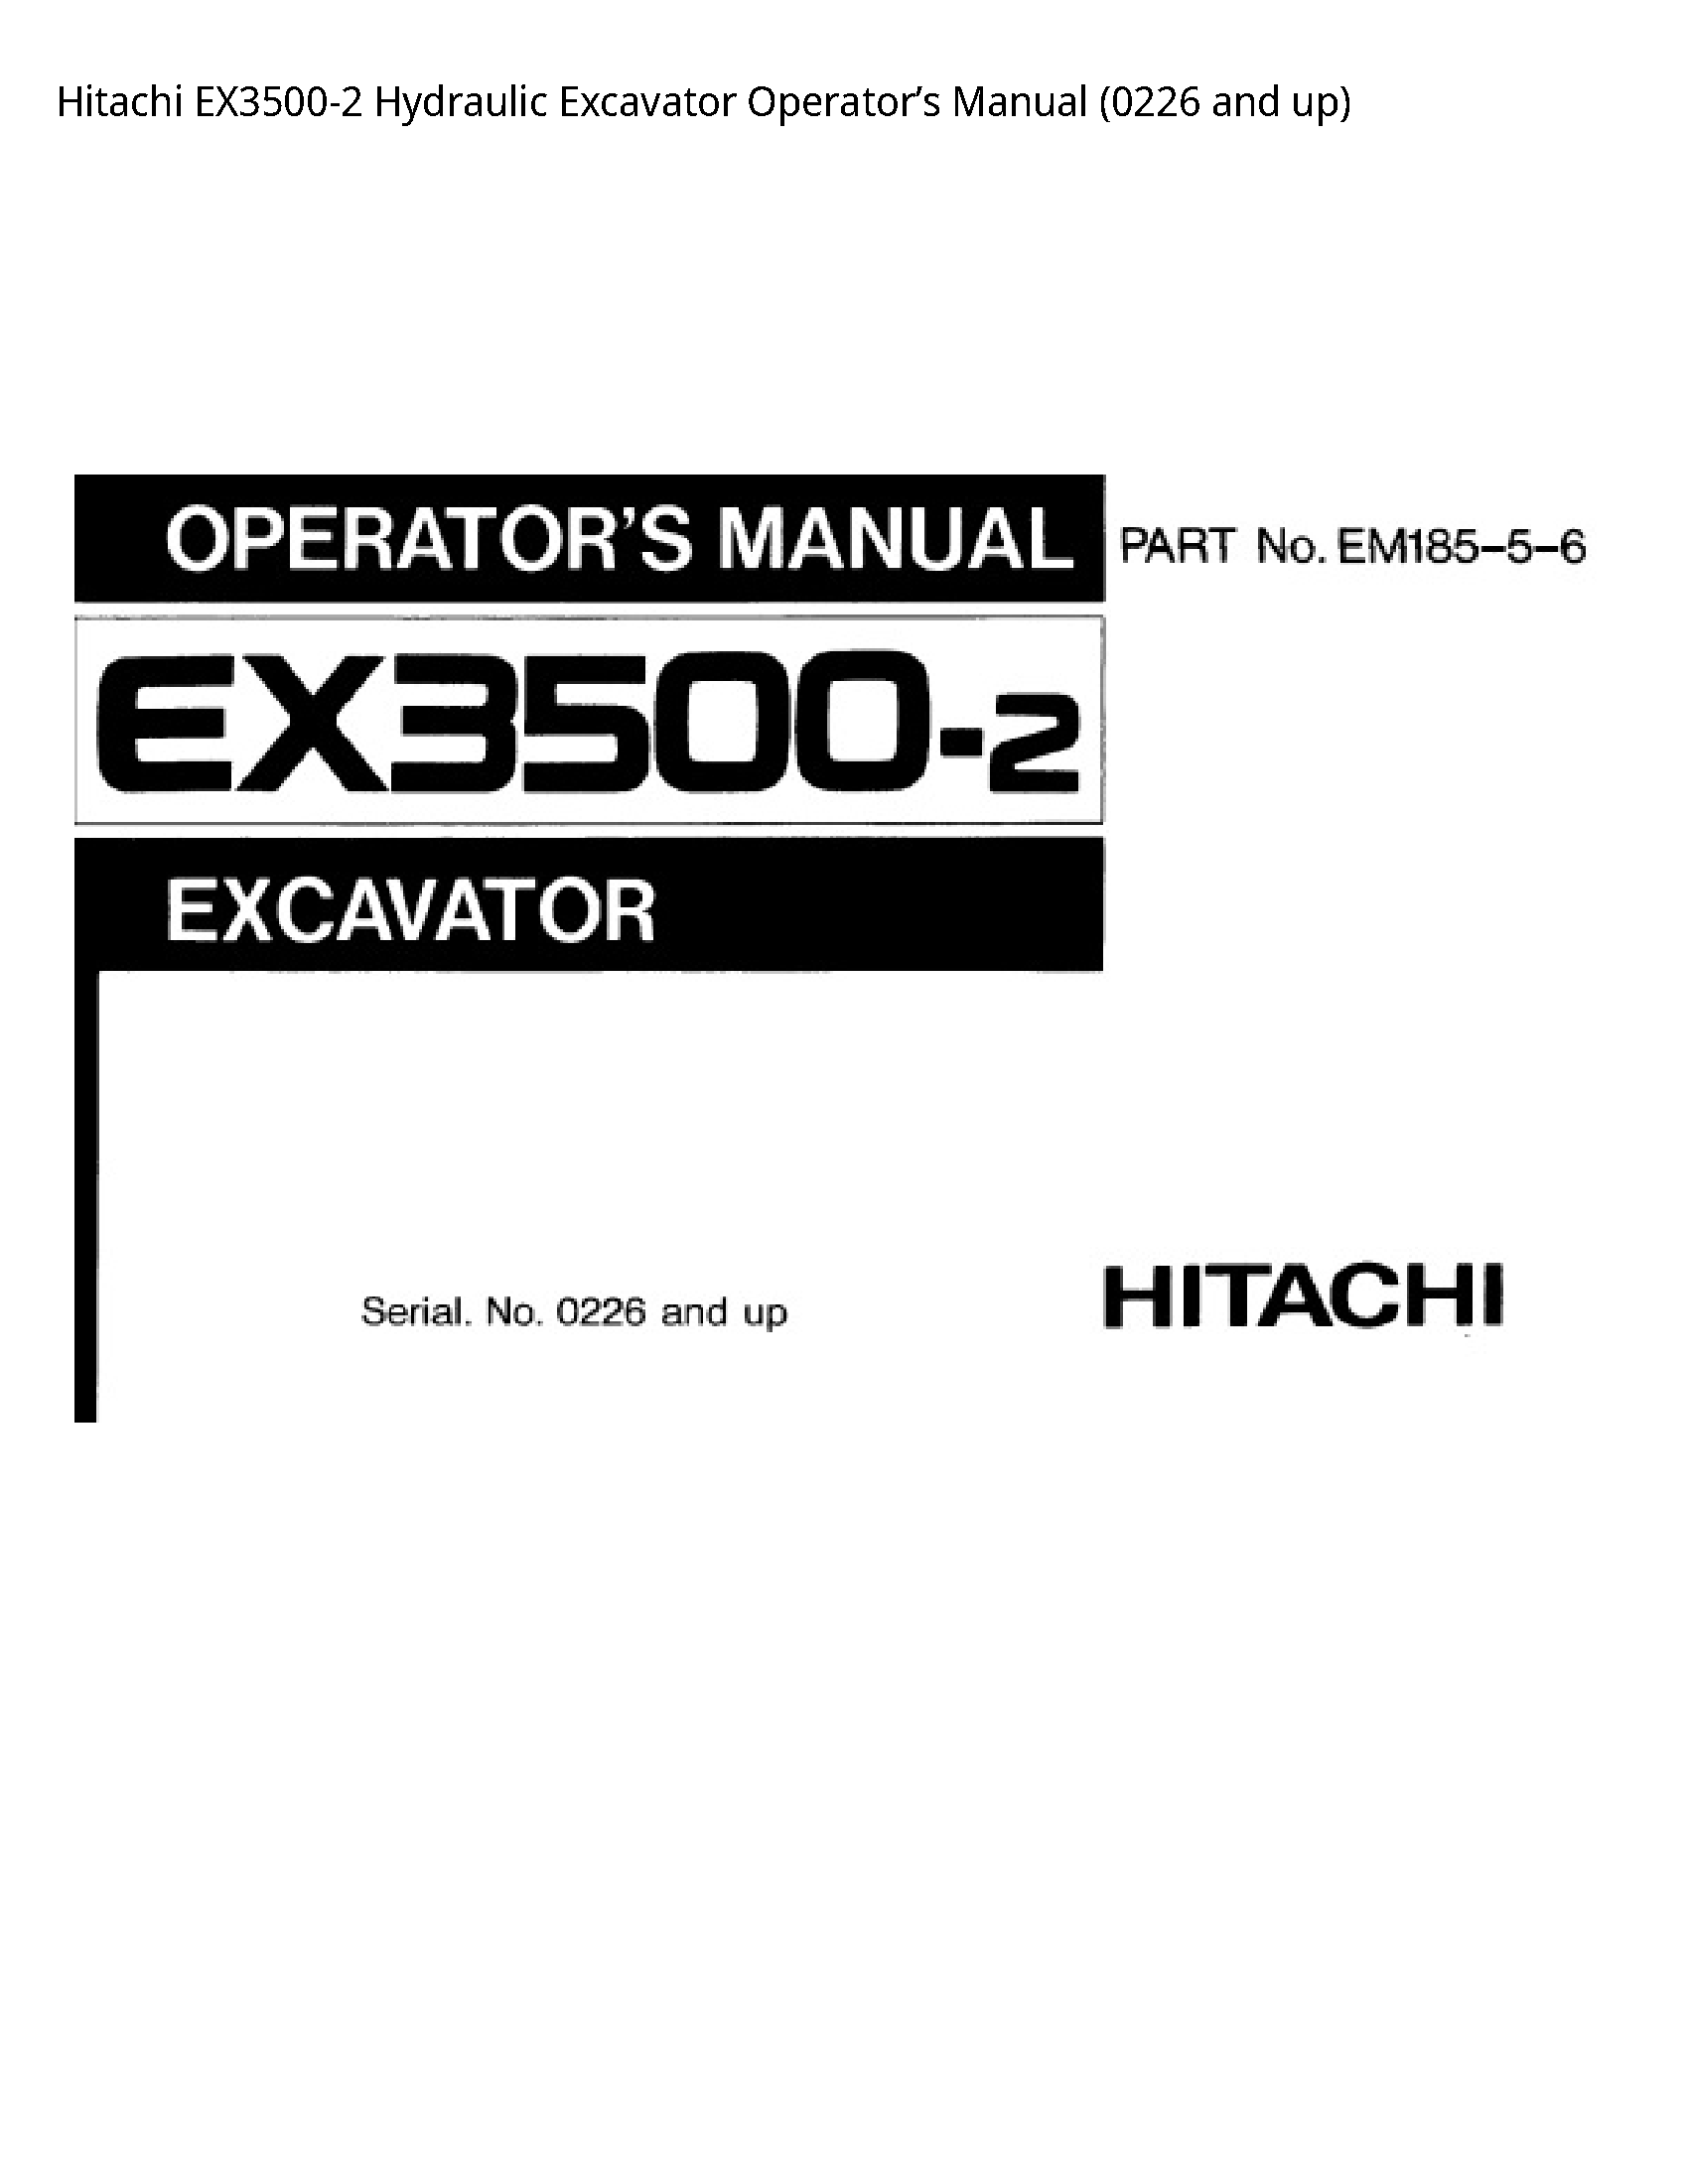 Hitachi EX3500-2 Hydraulic Excavator Operator’s manual